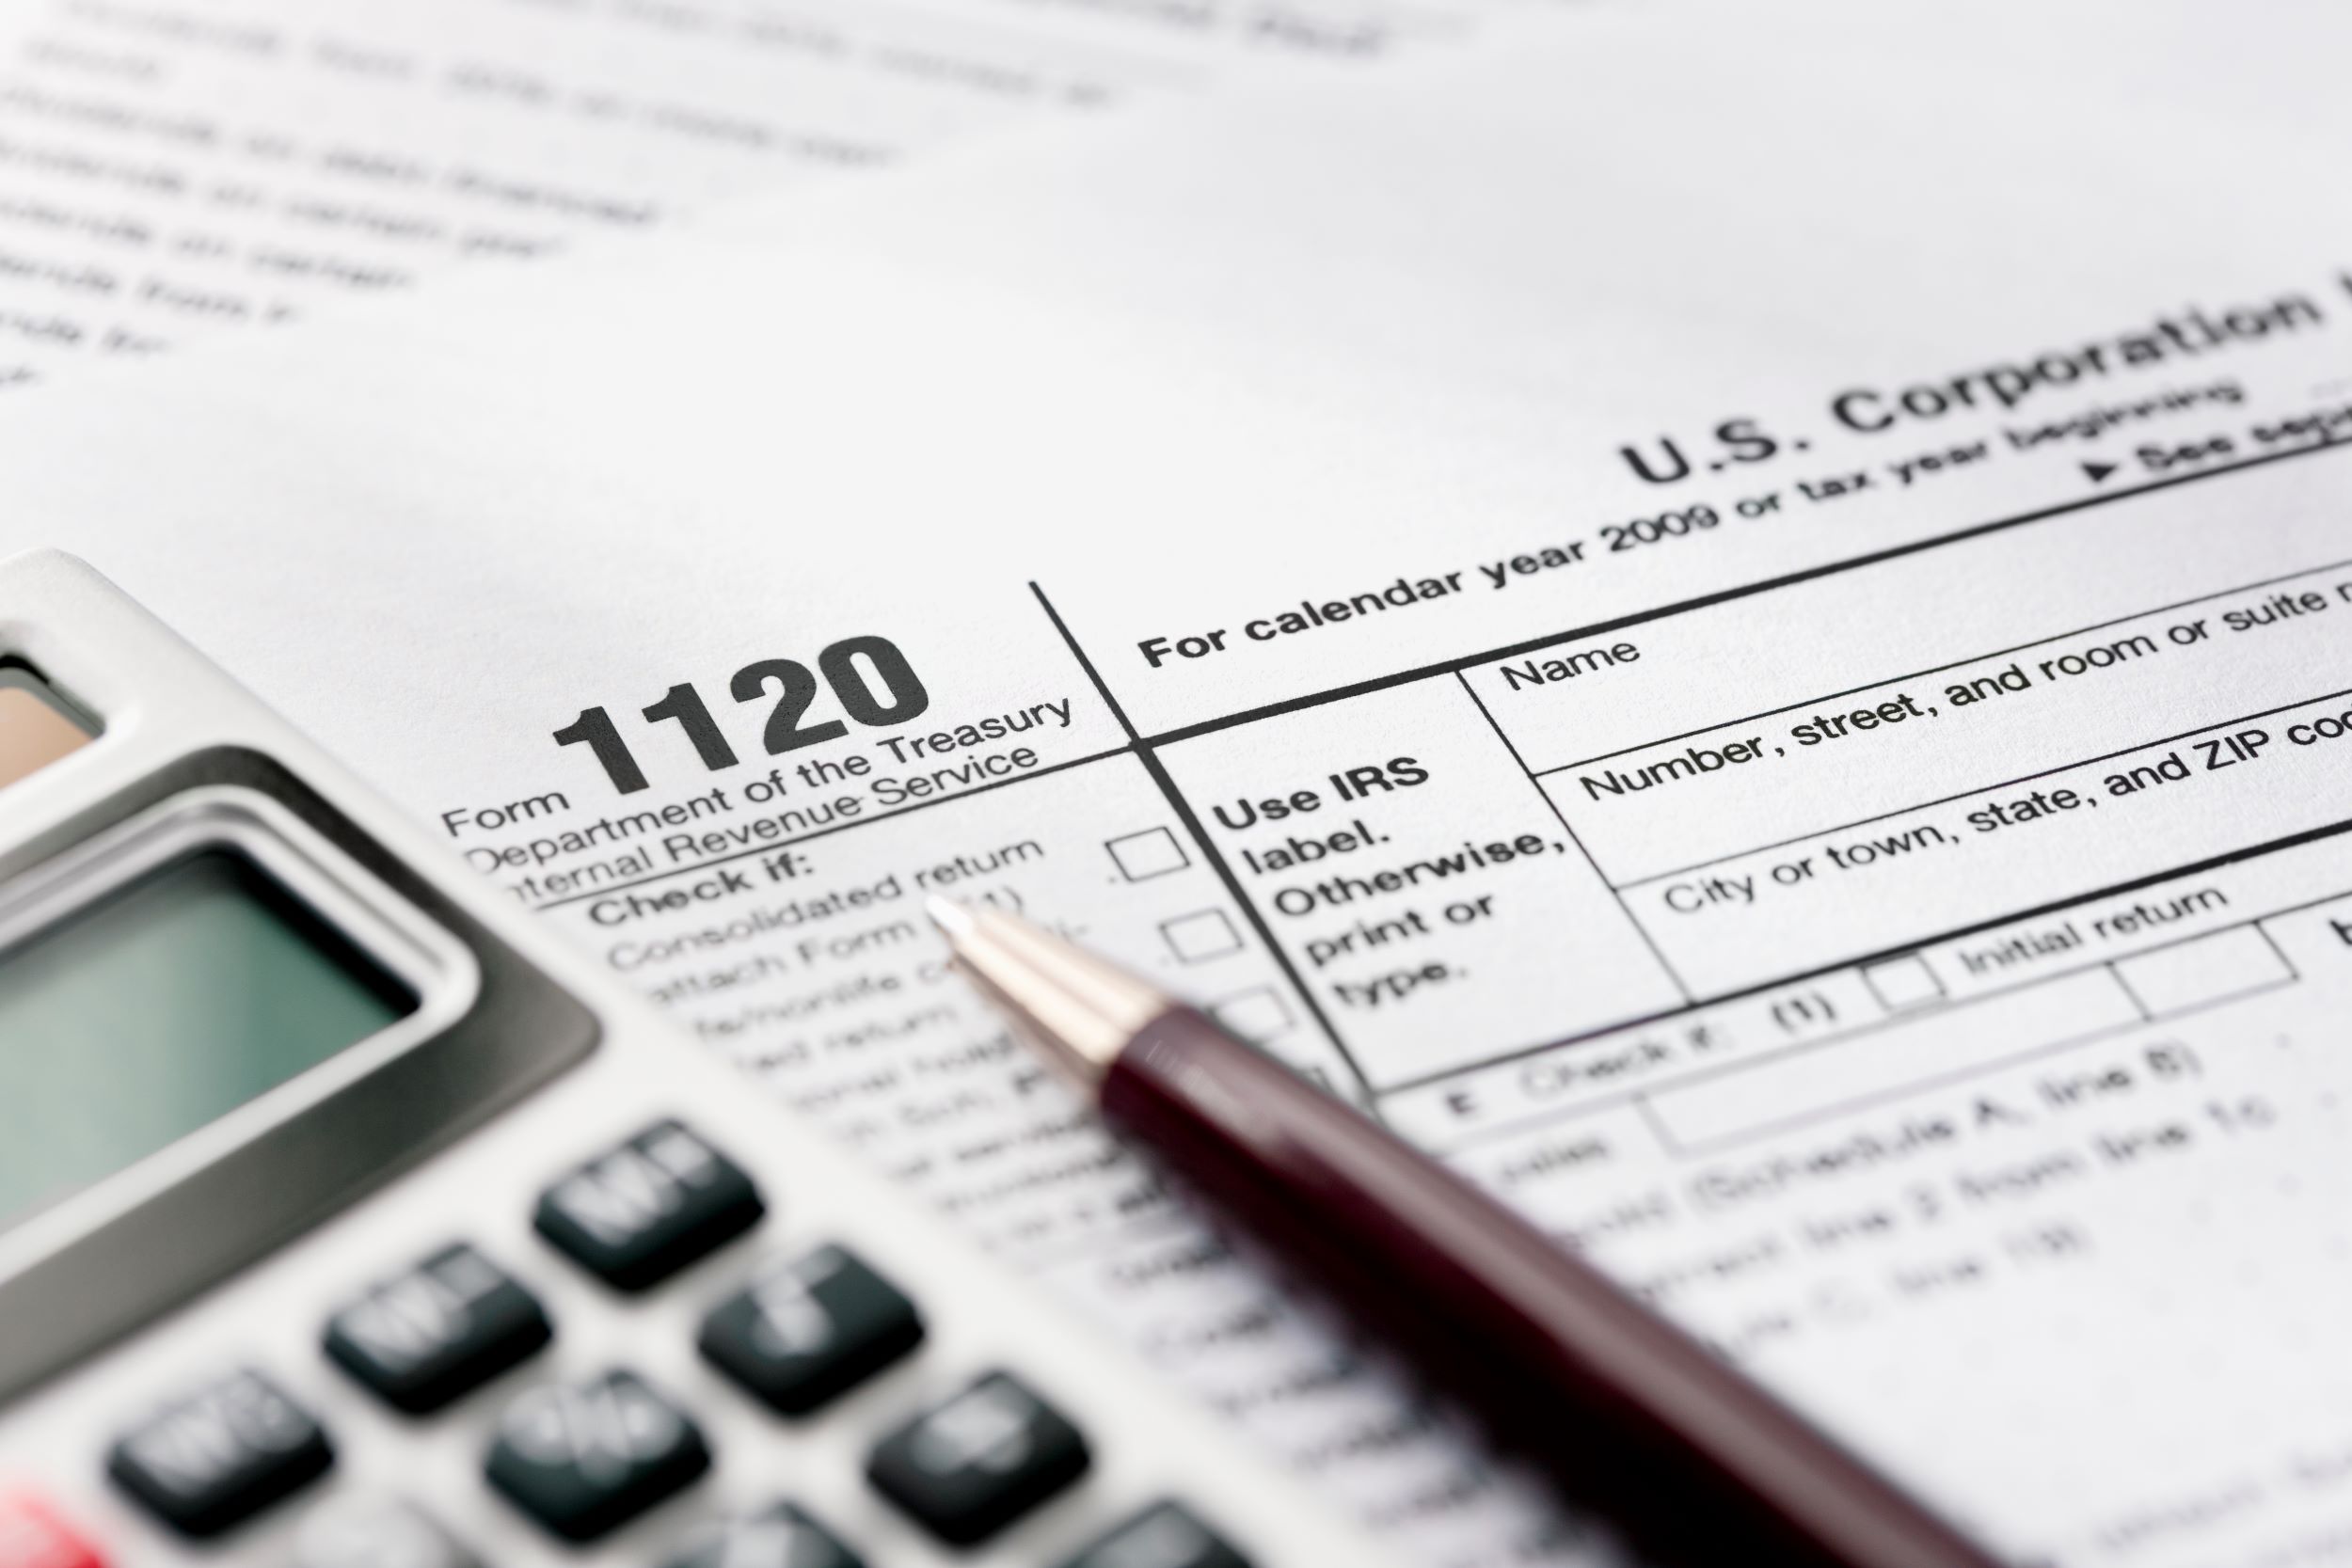 1120 U.S. Corporate tax